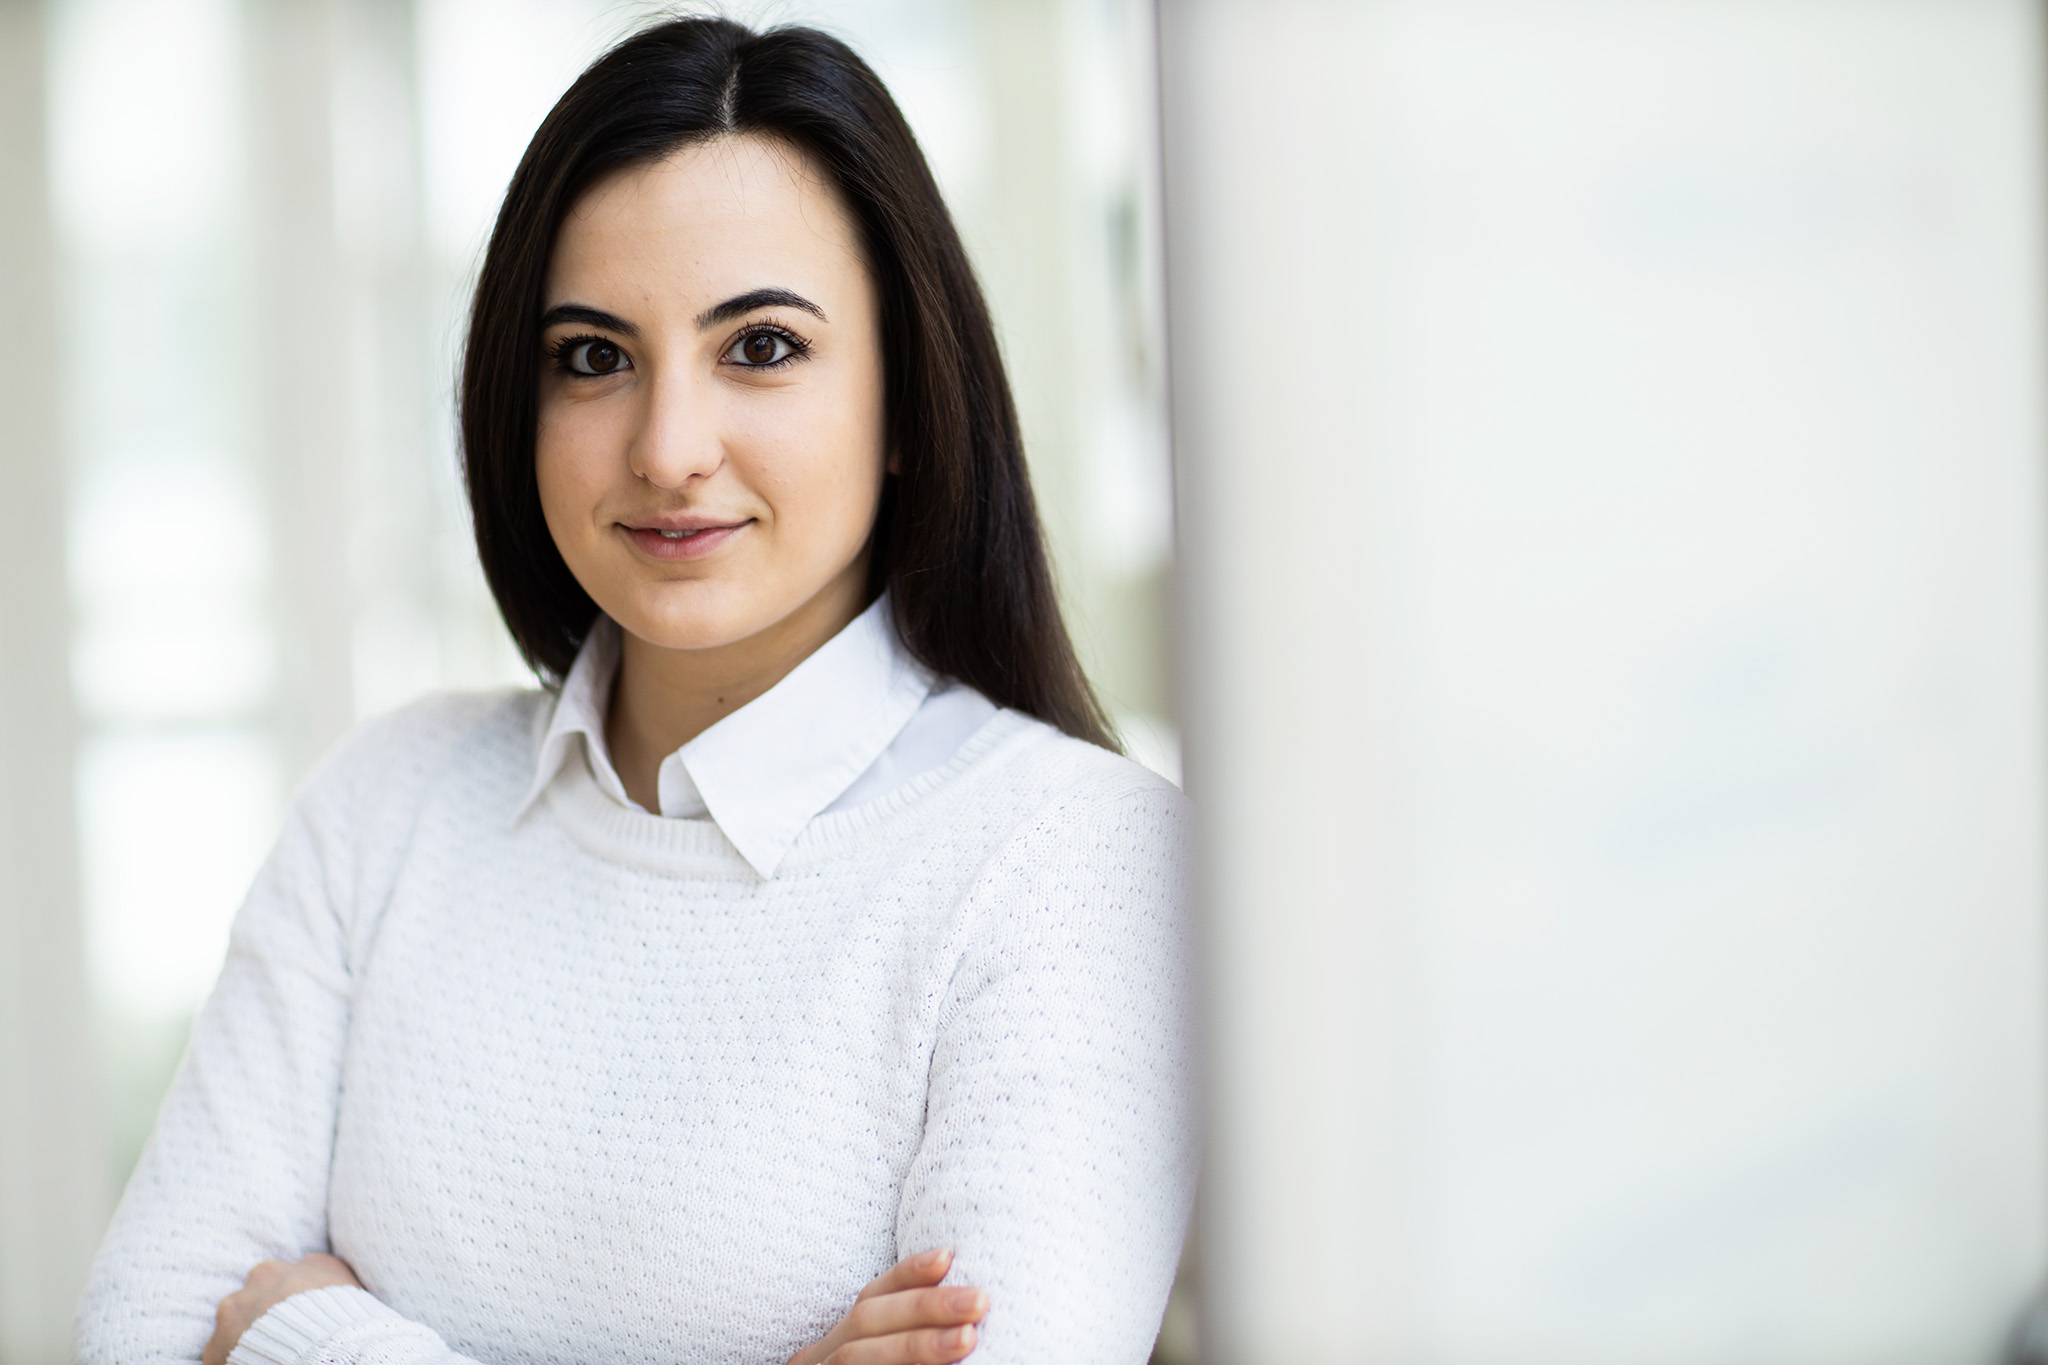 WHU Master in Entrepreneurship alumna Gabriela Ivanova